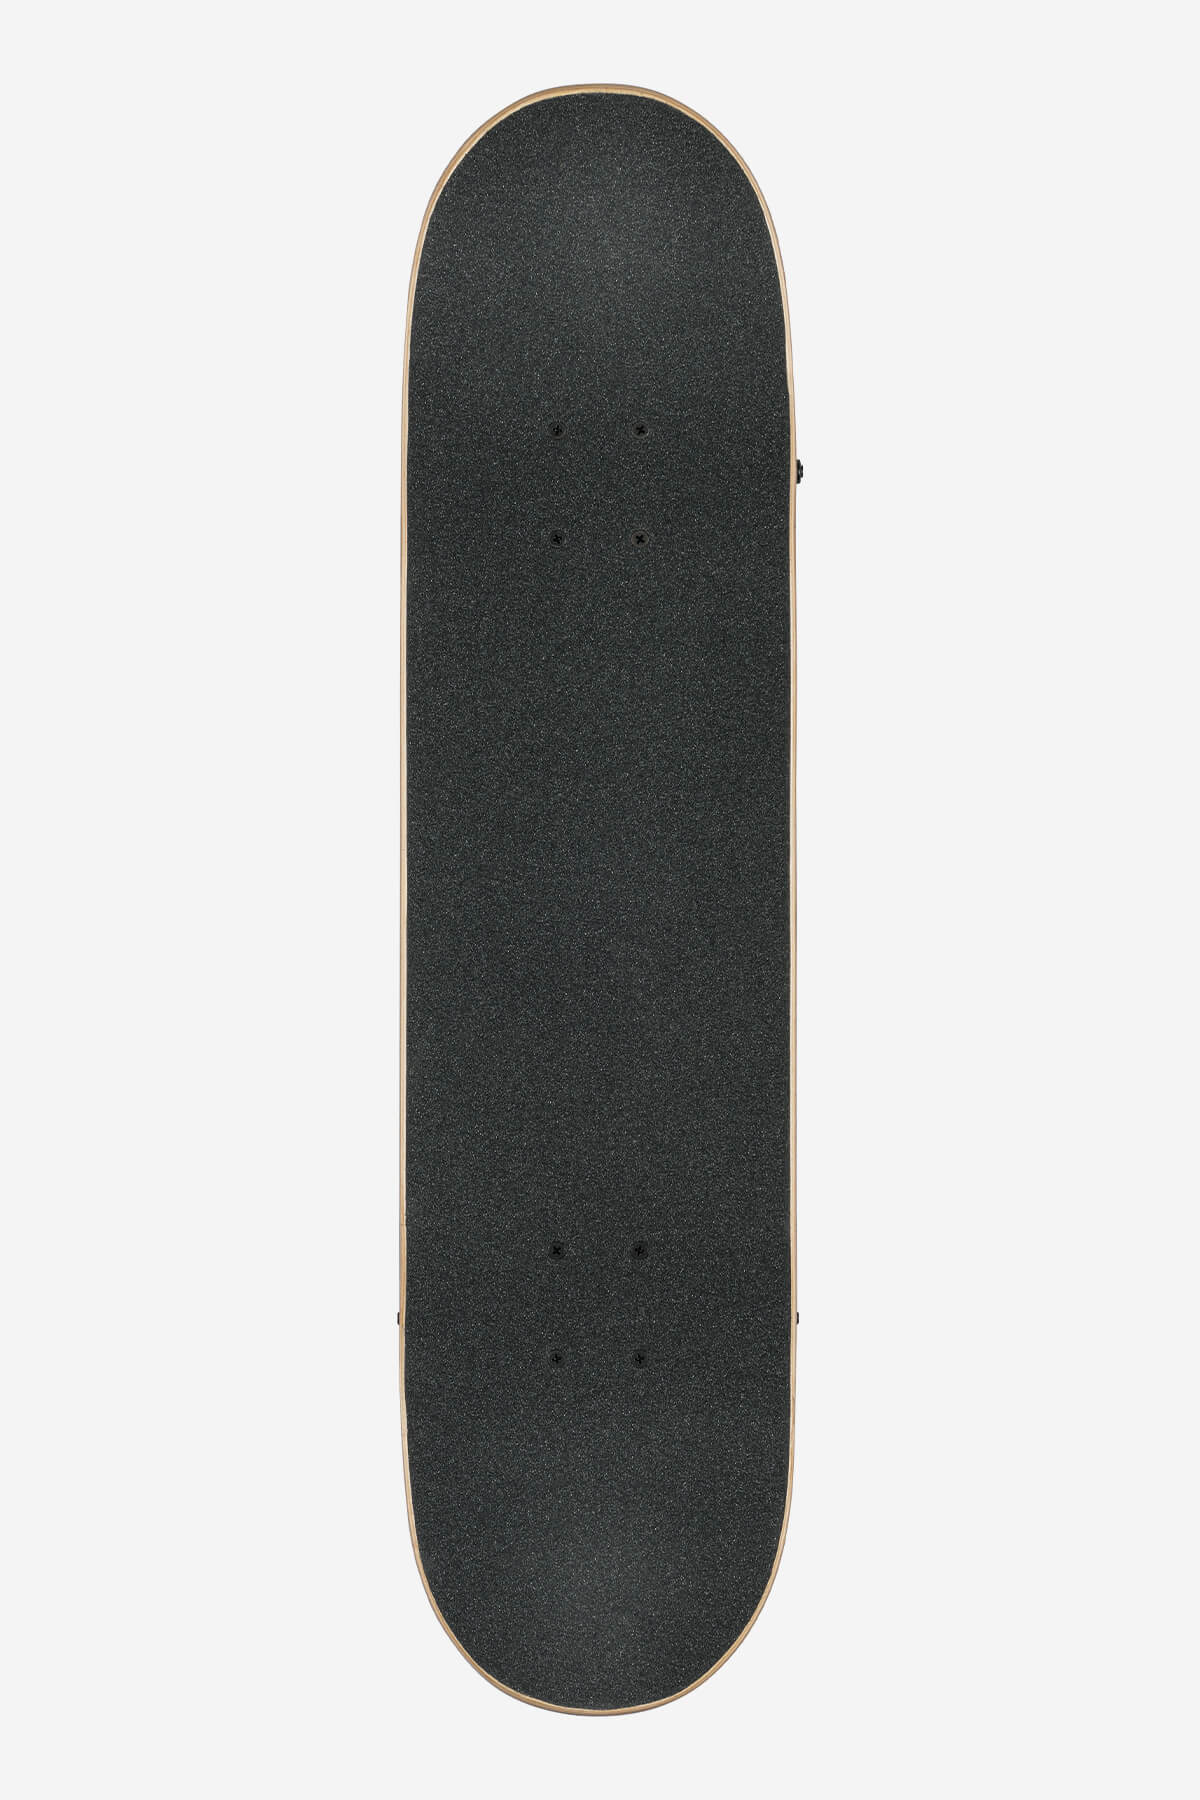 Globe - G1 Lineform - Nero - 7,75" Completo Skateboard